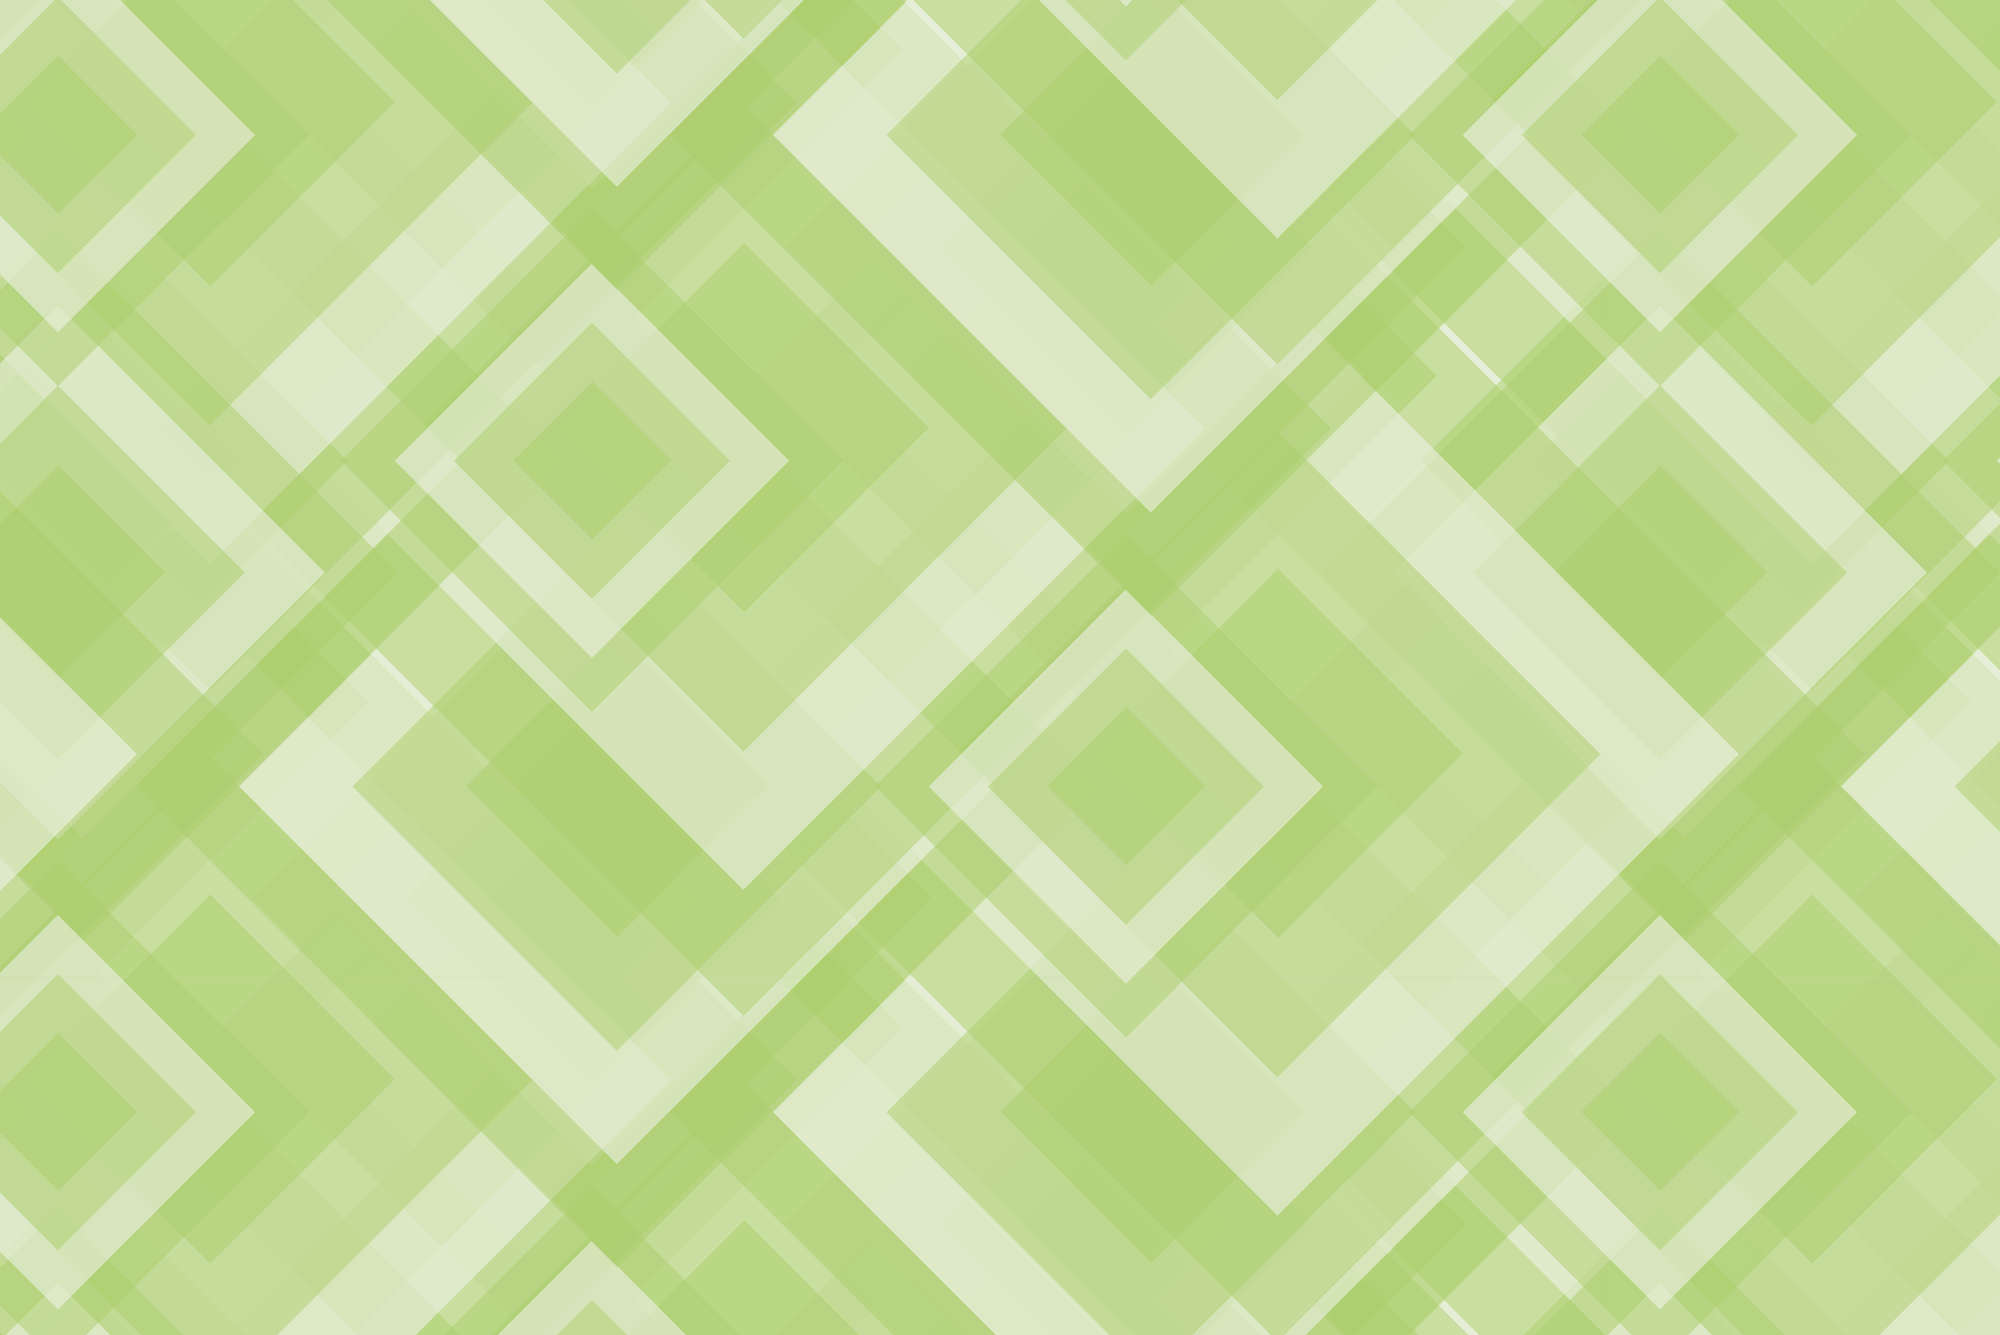             Design Fototapete überlappende Quadrate grün auf Matt Glattvlies
        